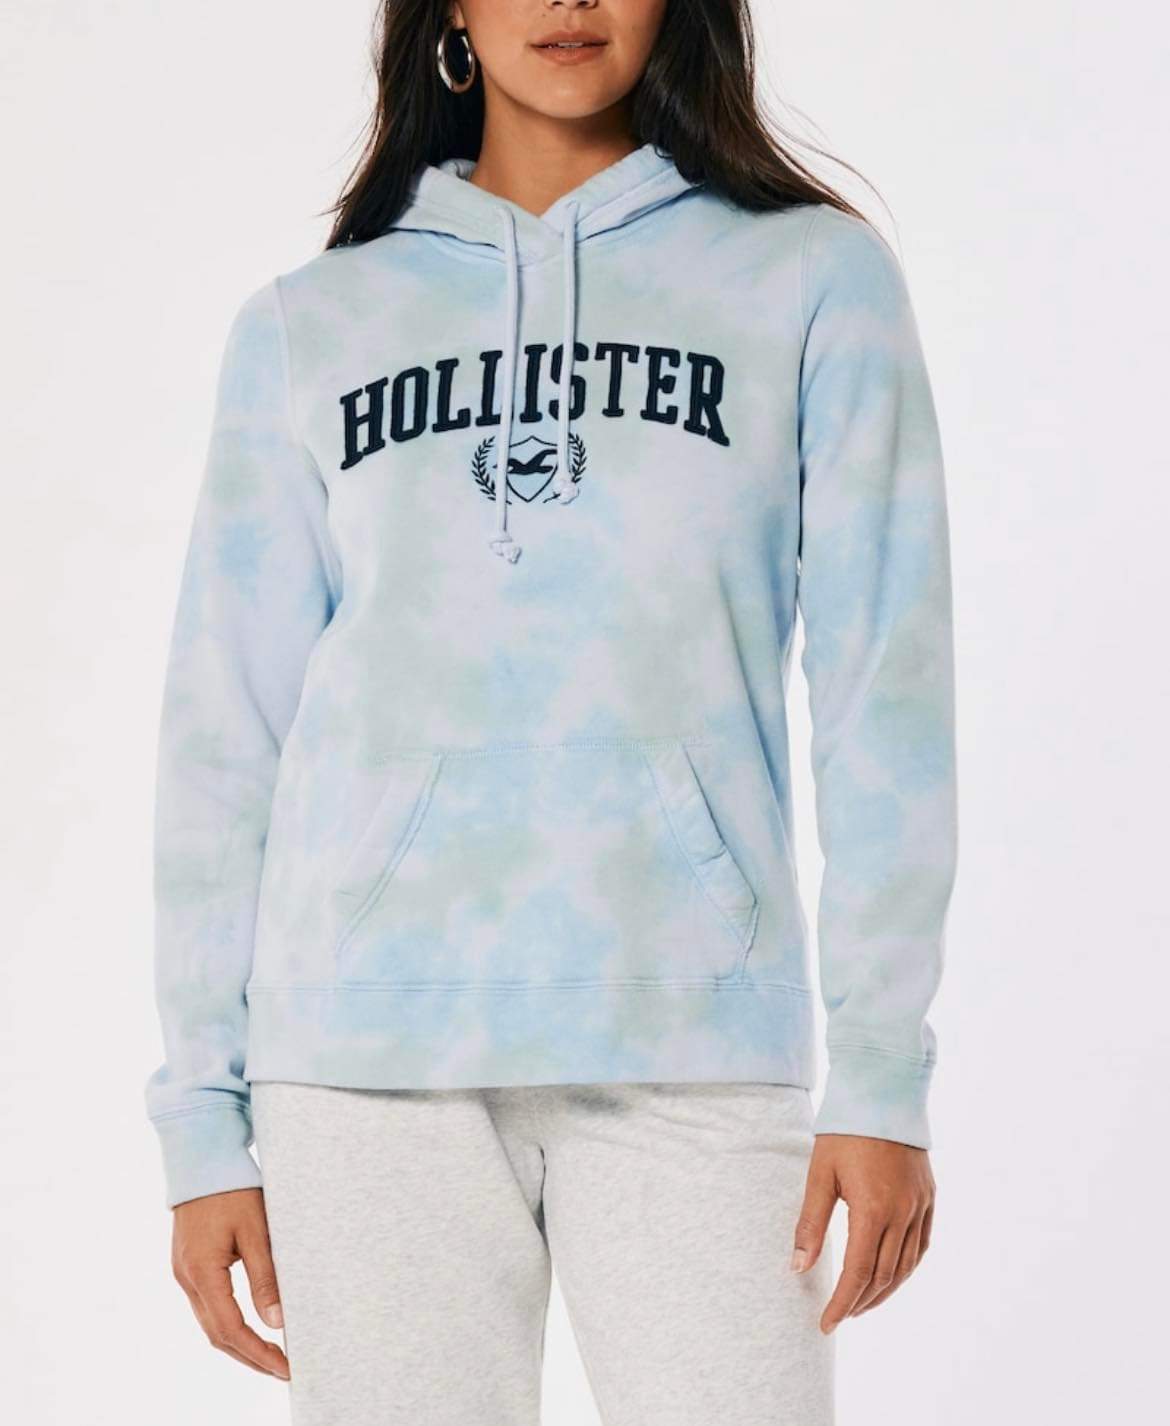 outlet4hollister - hollister Hollister Womens Hoodies Clothing